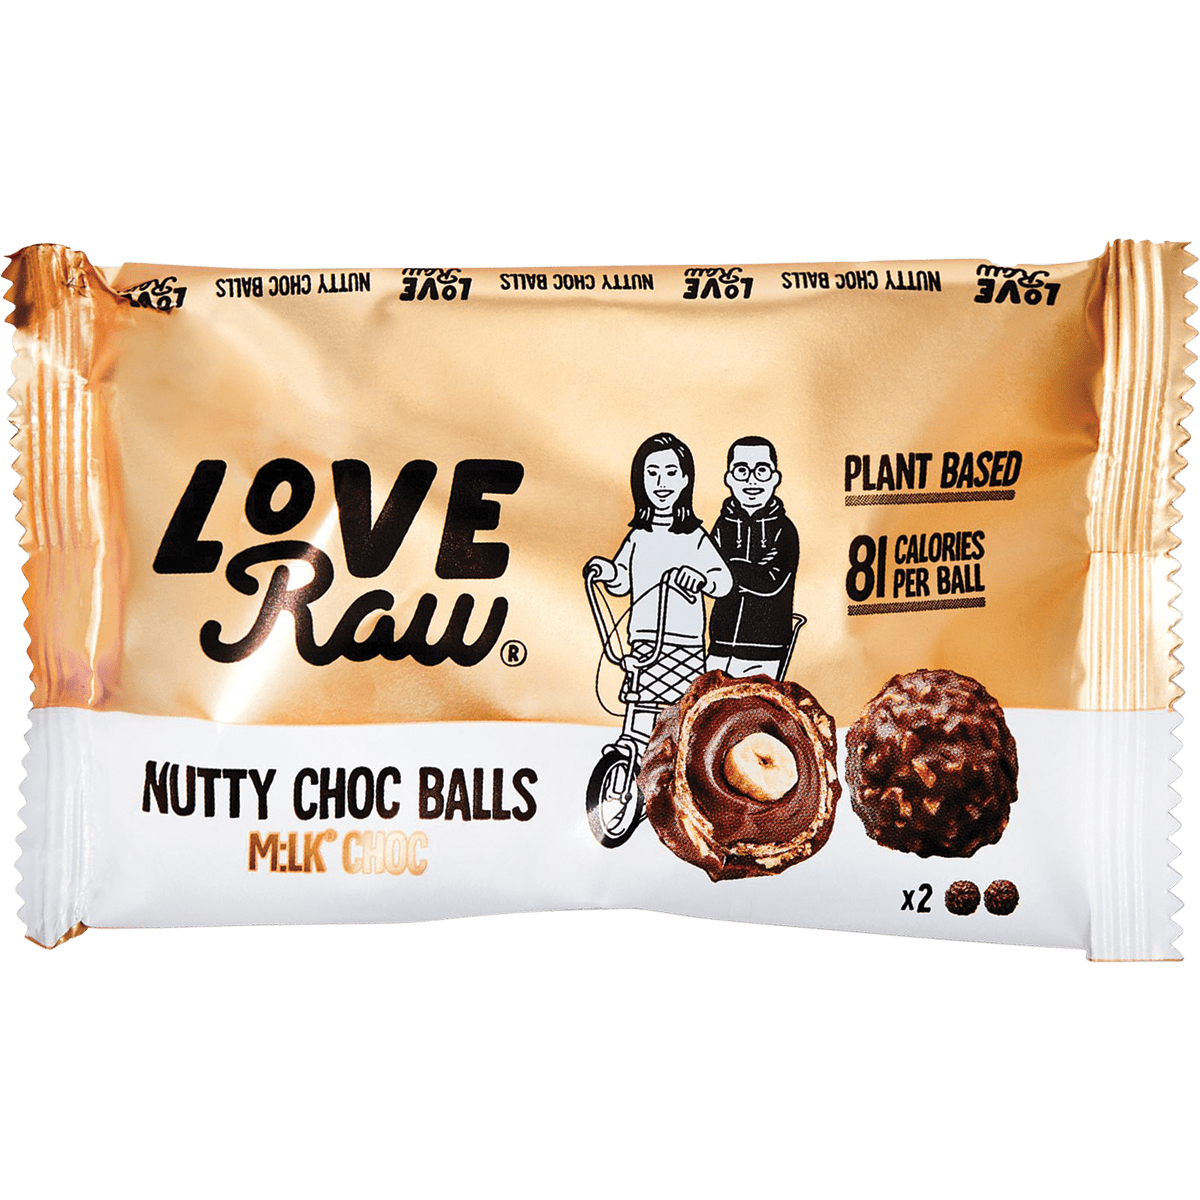 LOVERAW Nutty Choc Balls M:lk Choc 9 x 28g